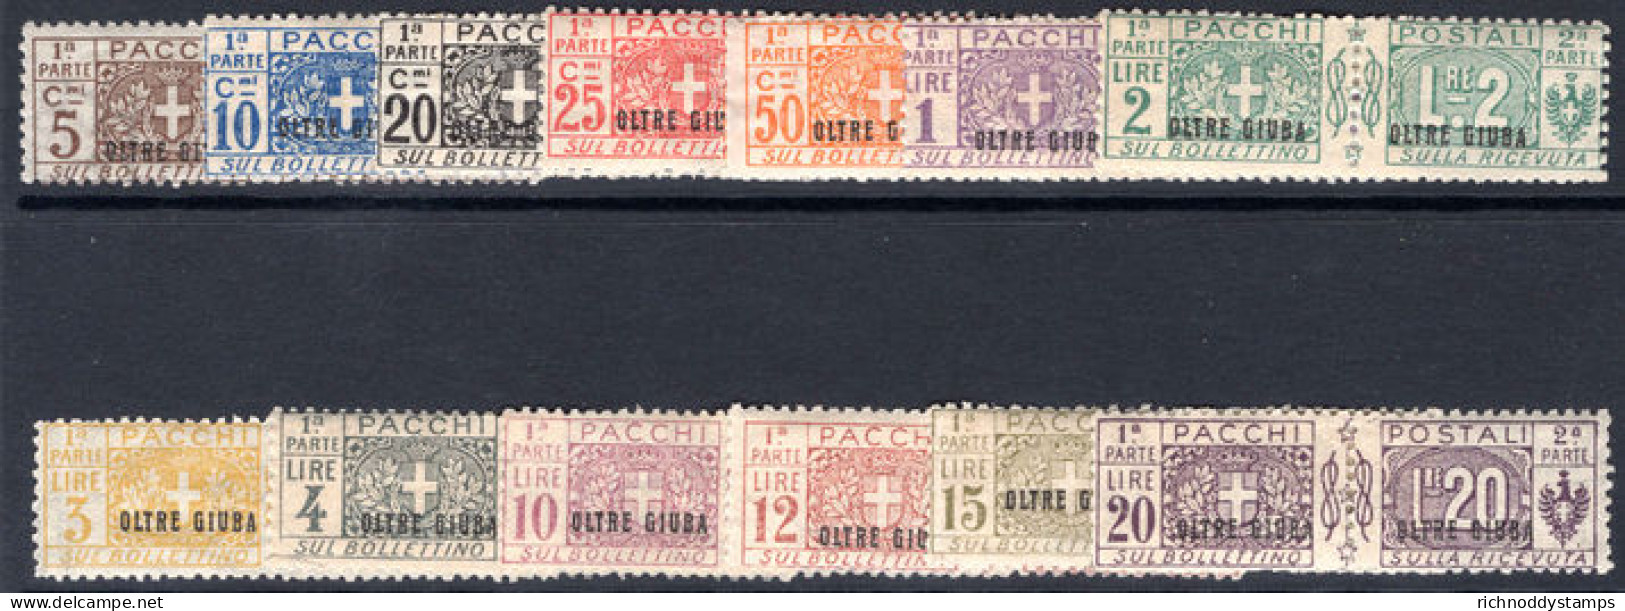 Jubaland 1925 Parcel Post Set Fine Lightly Mounted Mint. - Oltre Giuba